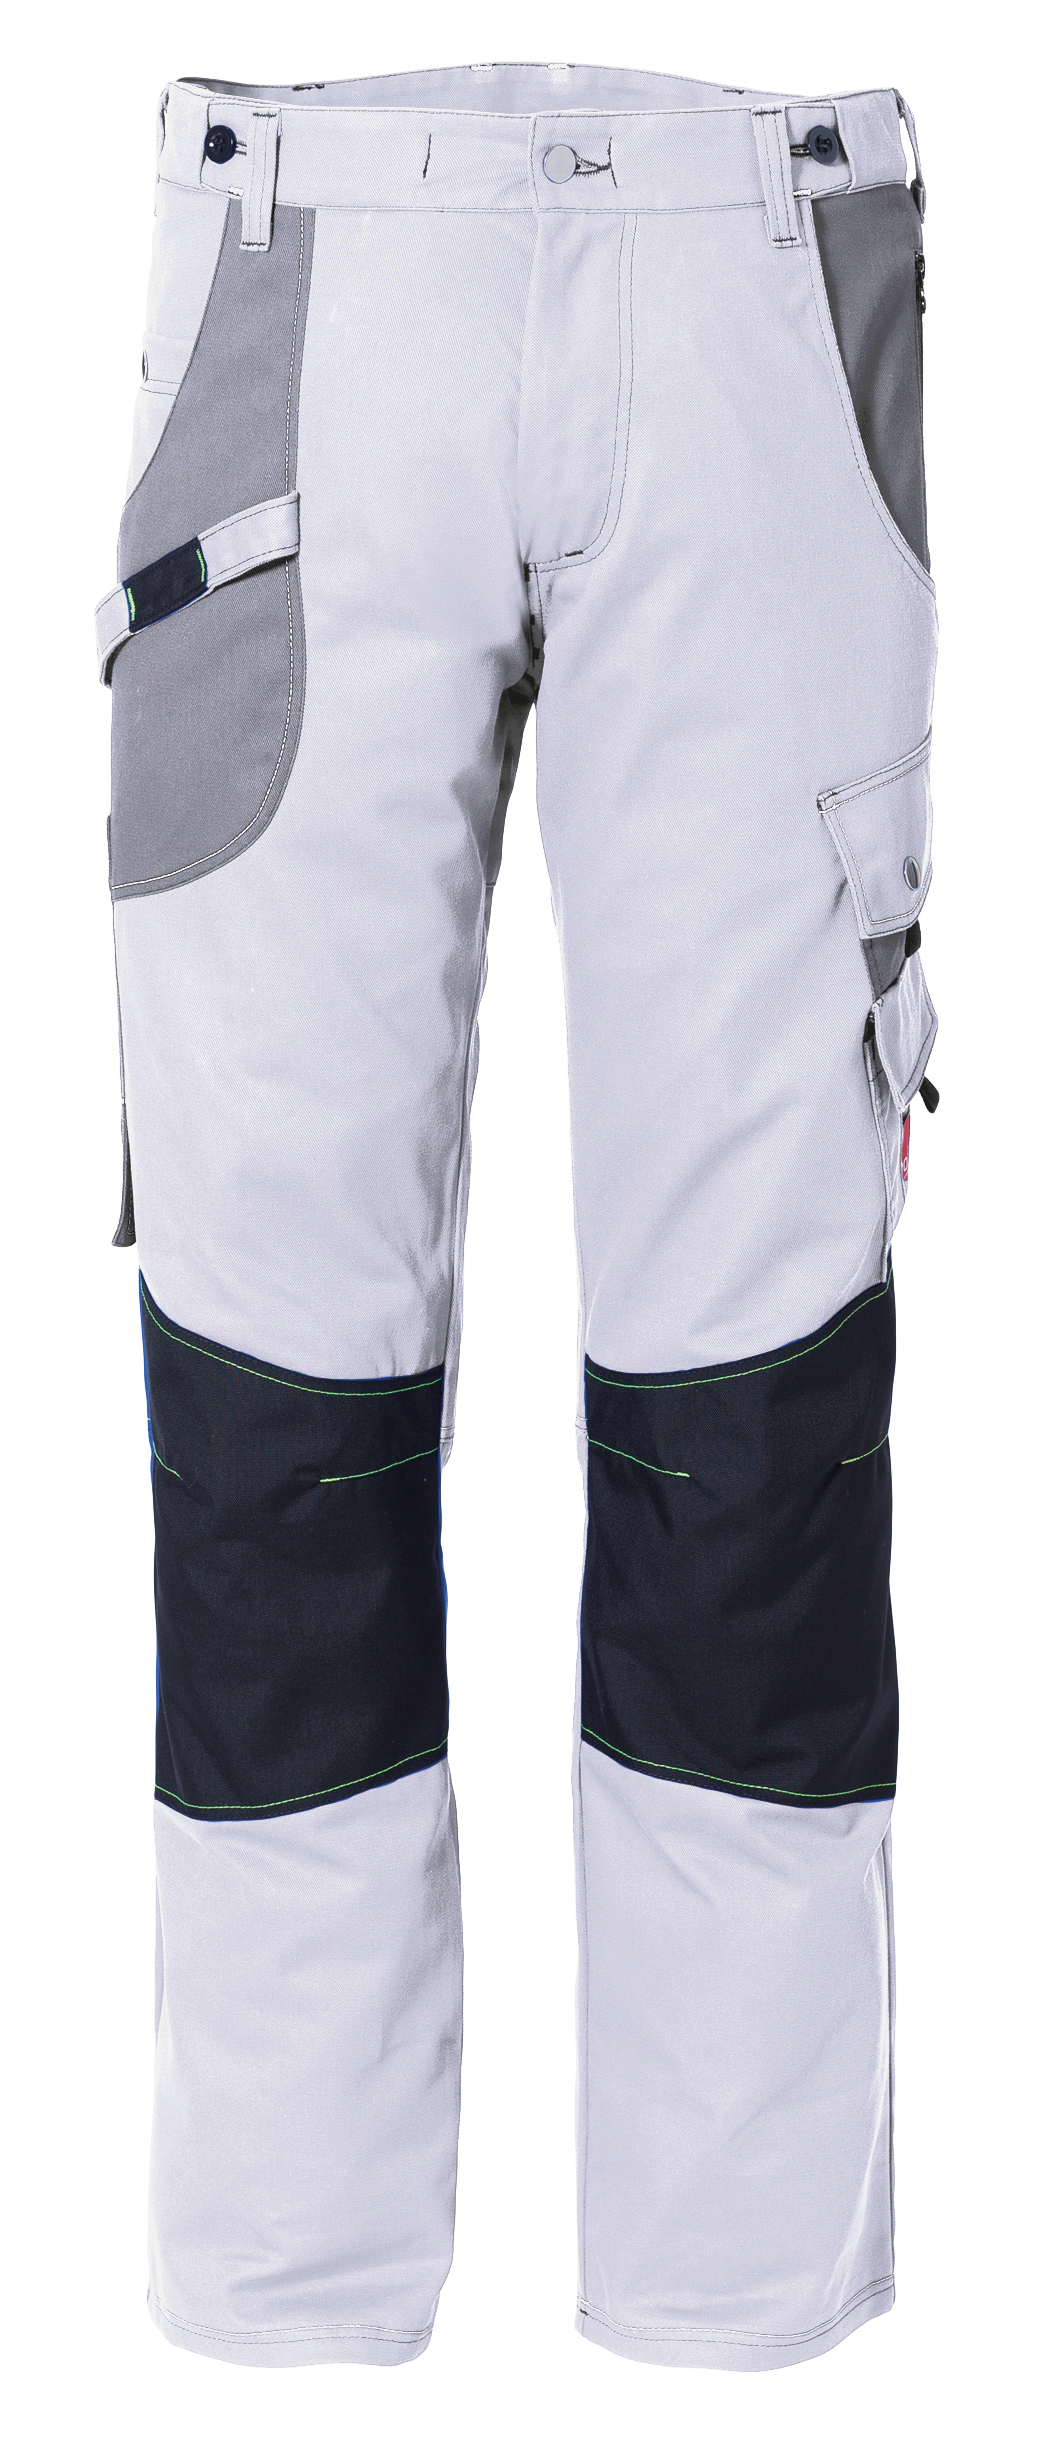 ROFA Bundhose Arbeitshose Berufshose Workerhose Arbeitskleidung Berufskleidung Young hellgrau dunkelgrau ca 270 g